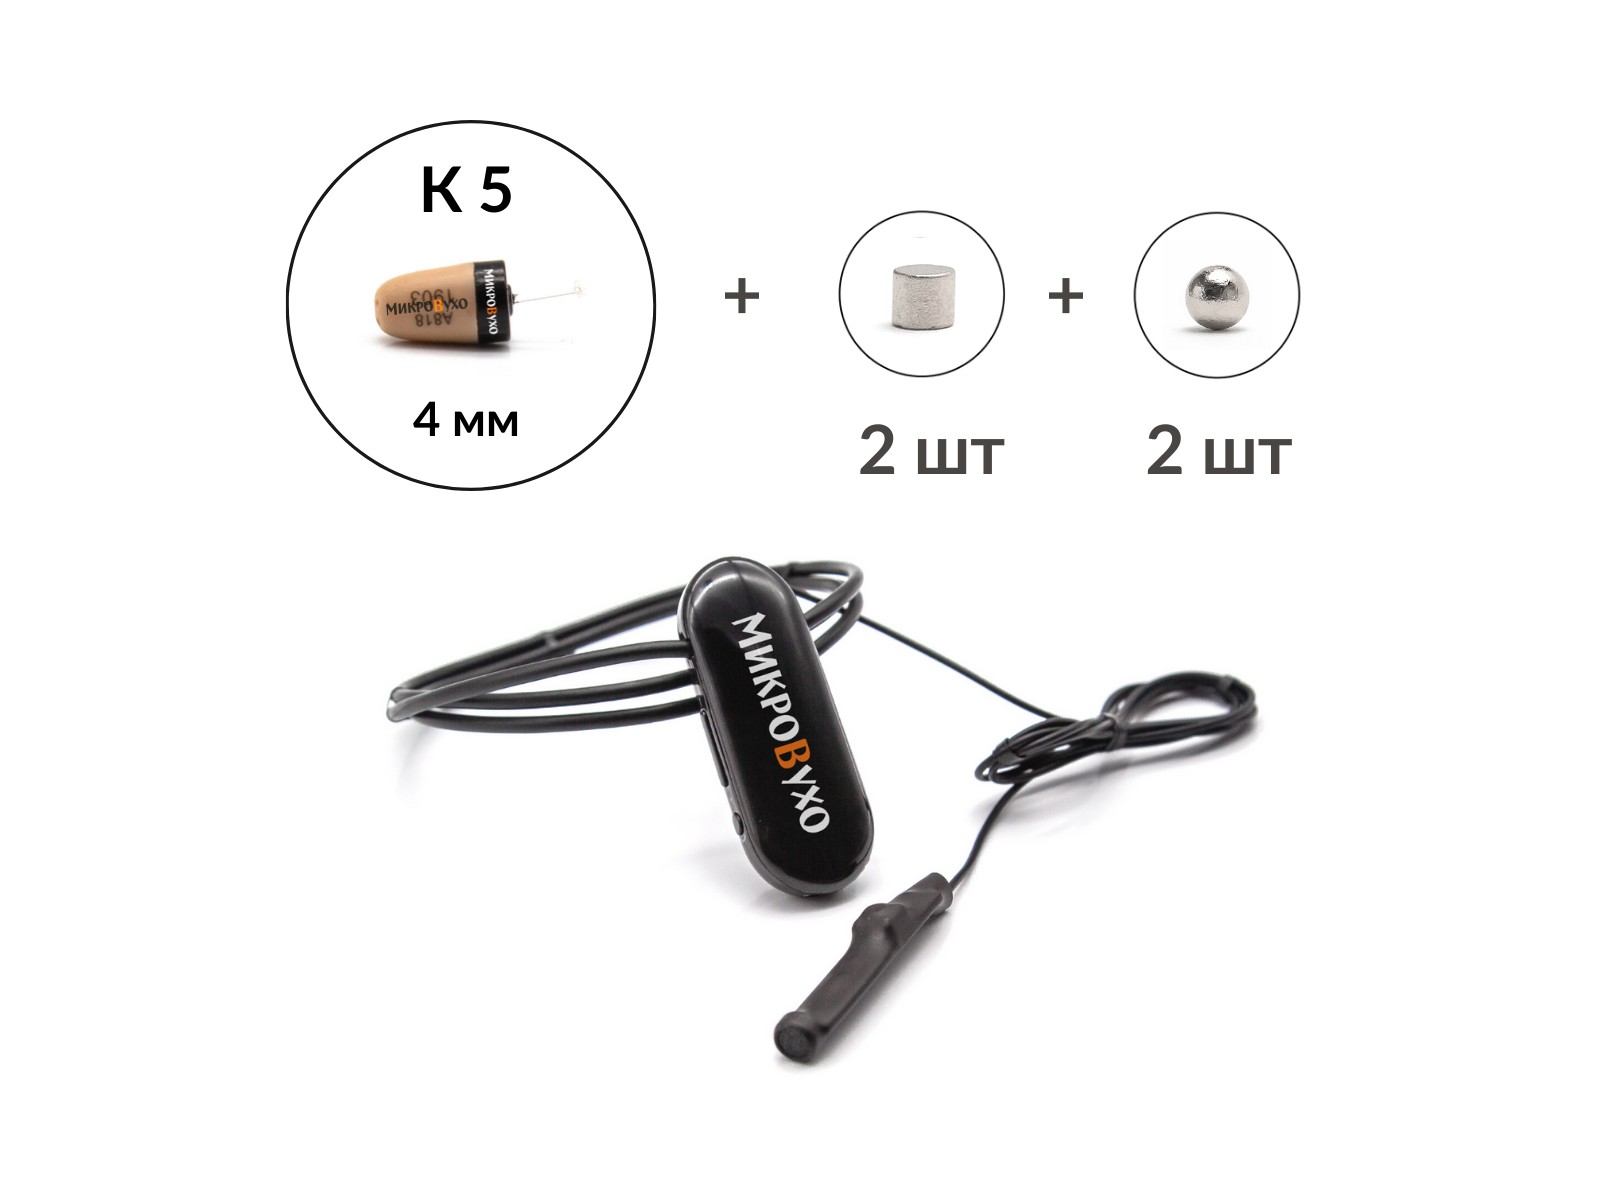 Аренда микронаушника Bluetooth Basic с капсулой K5 4 мм и магнитами 2 мм